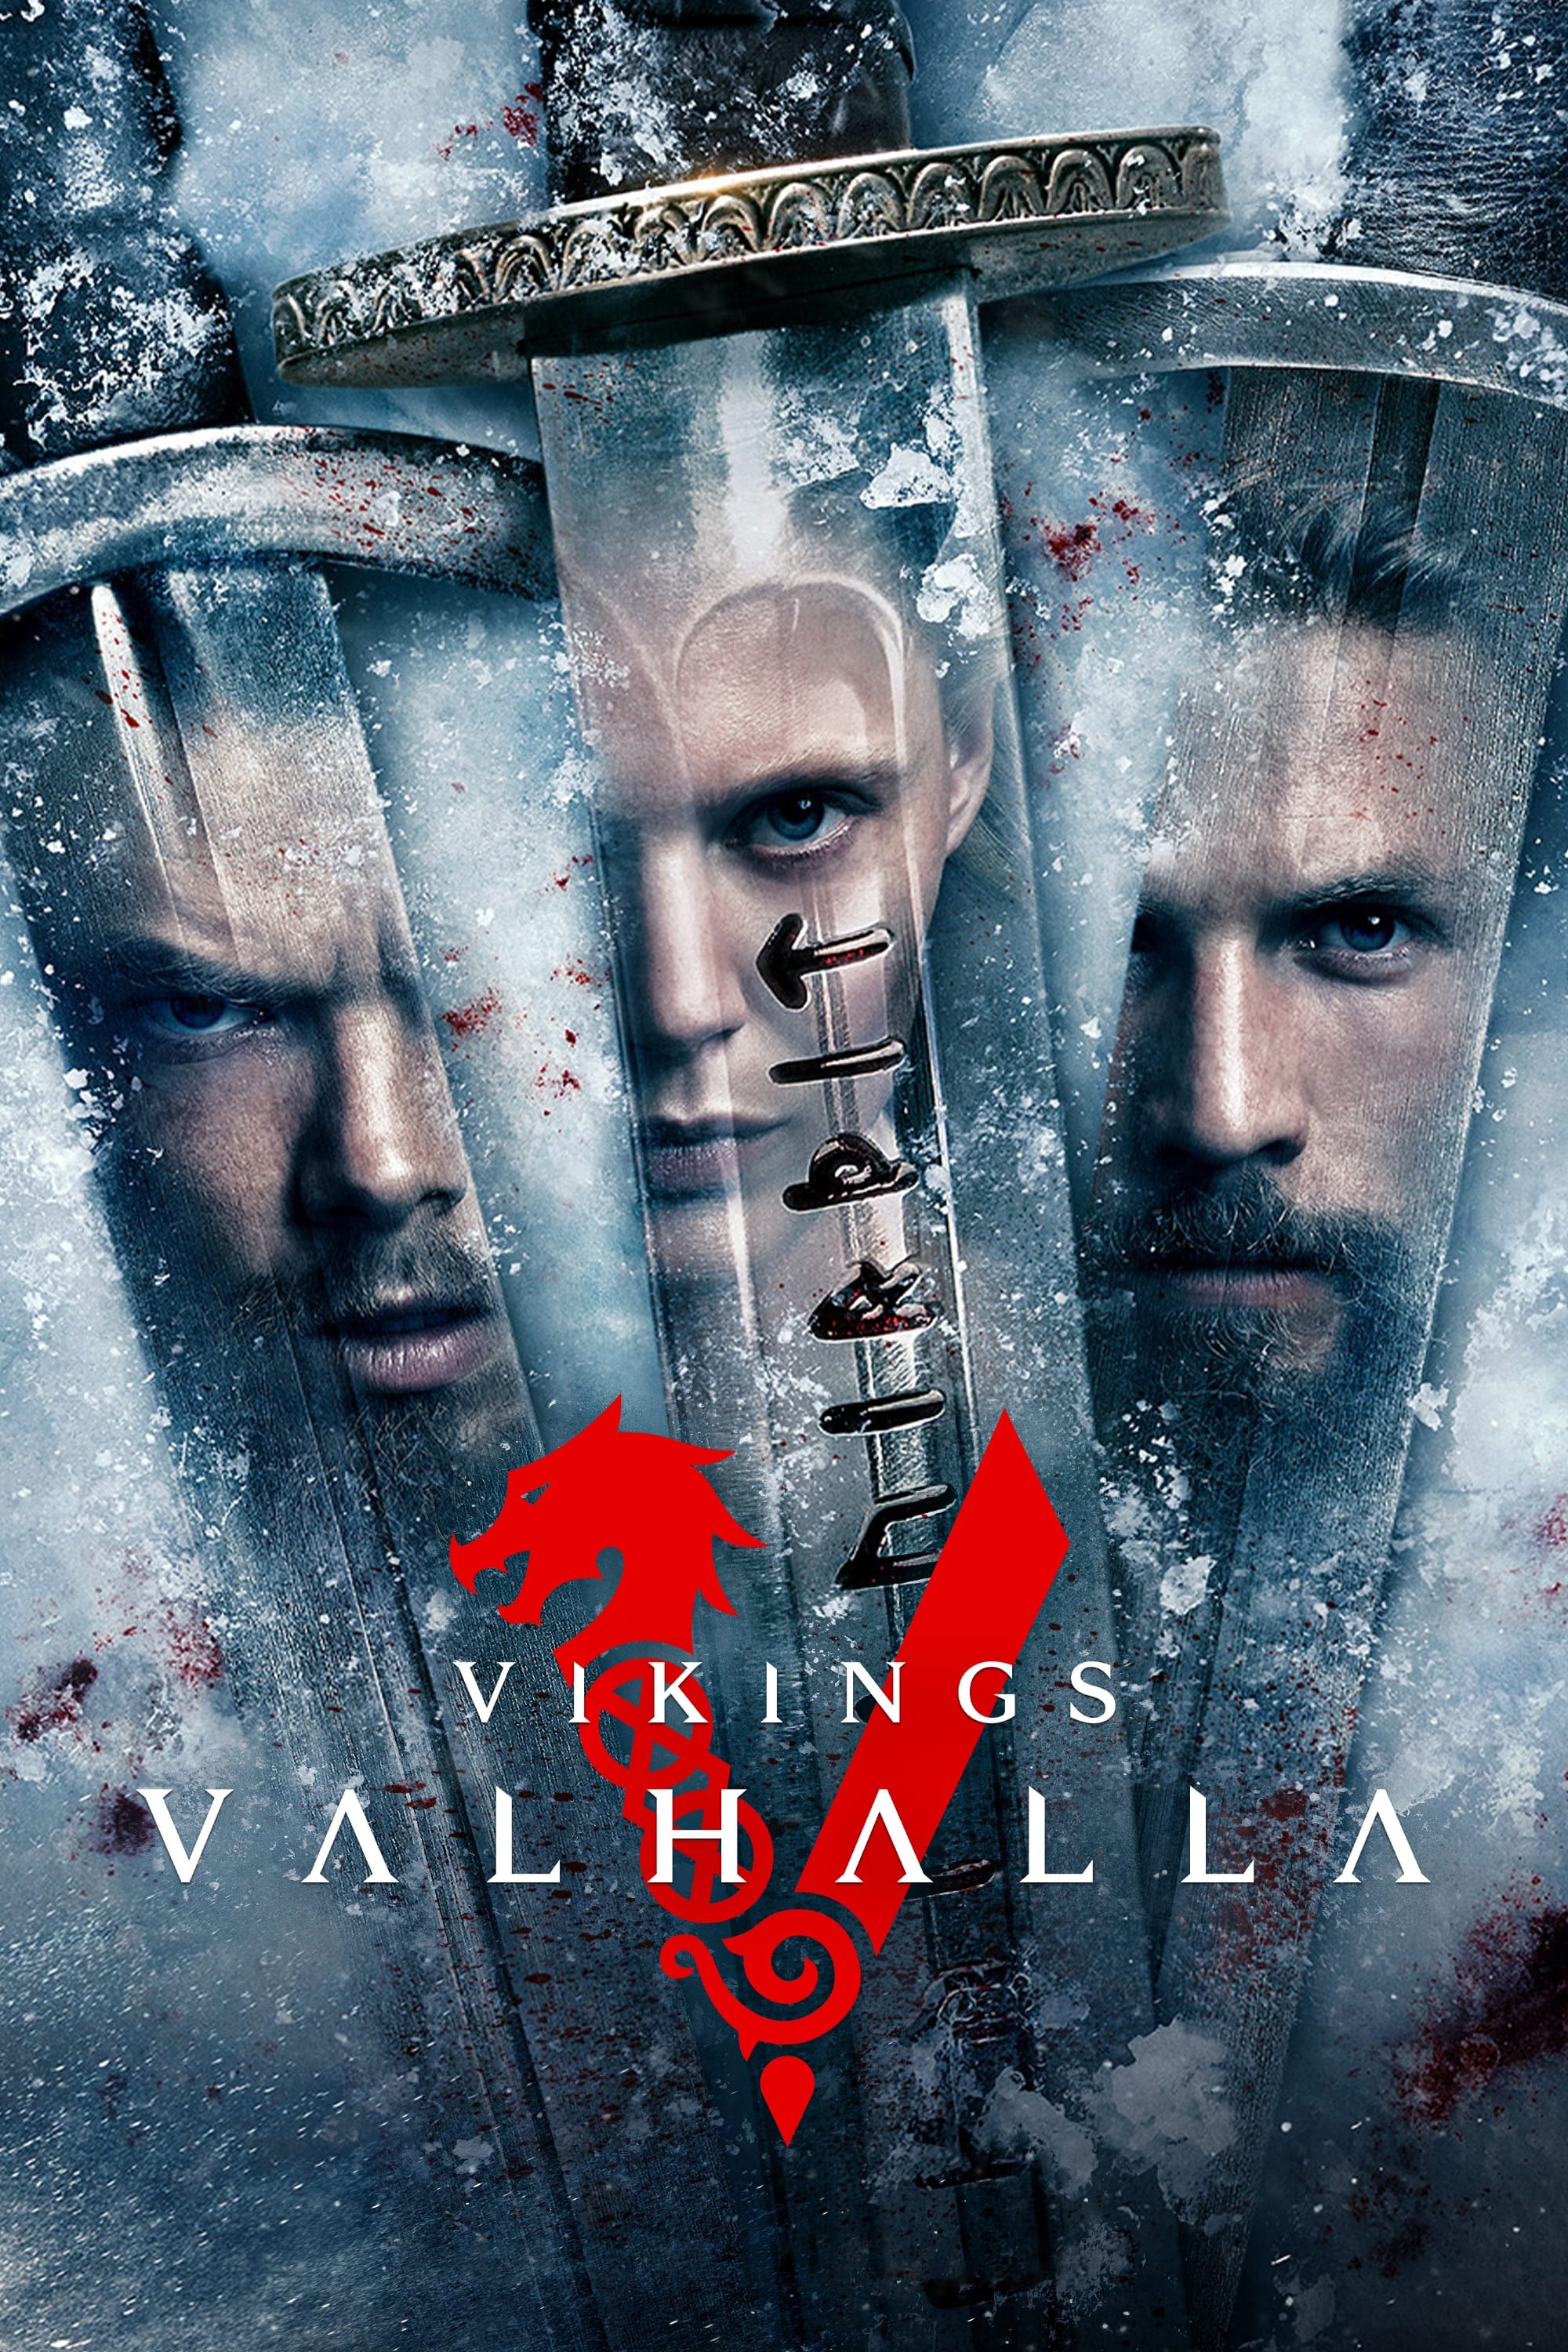 Huyền thoại Vikings: Valhalla (Phần 2)